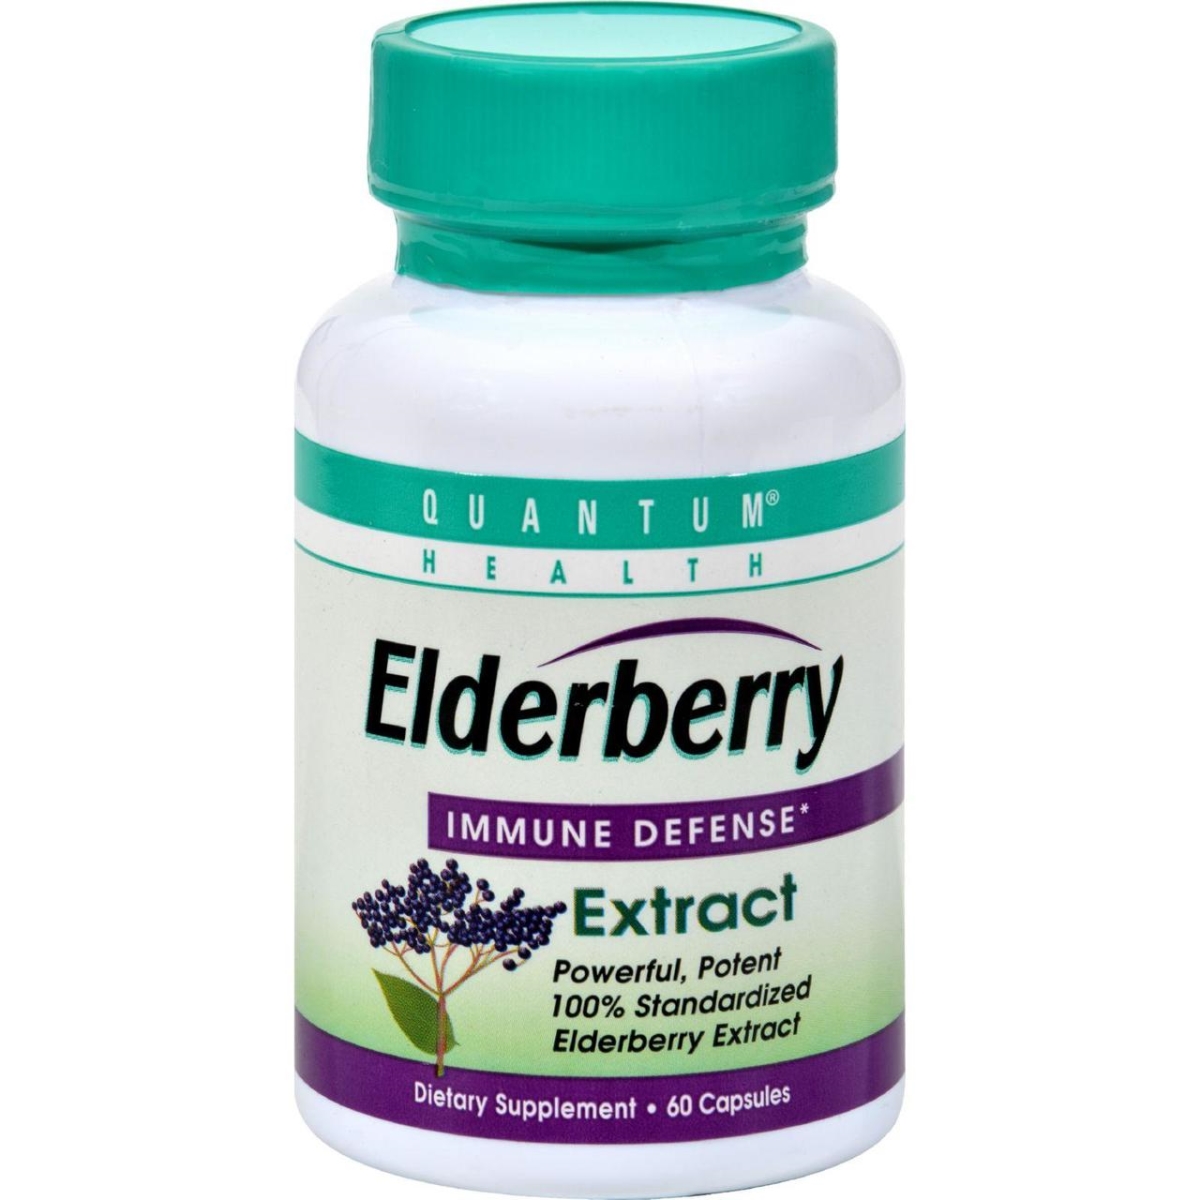 Hg0441824 400 Mg Elderberry Immune Defense Extract, 60 Capsules